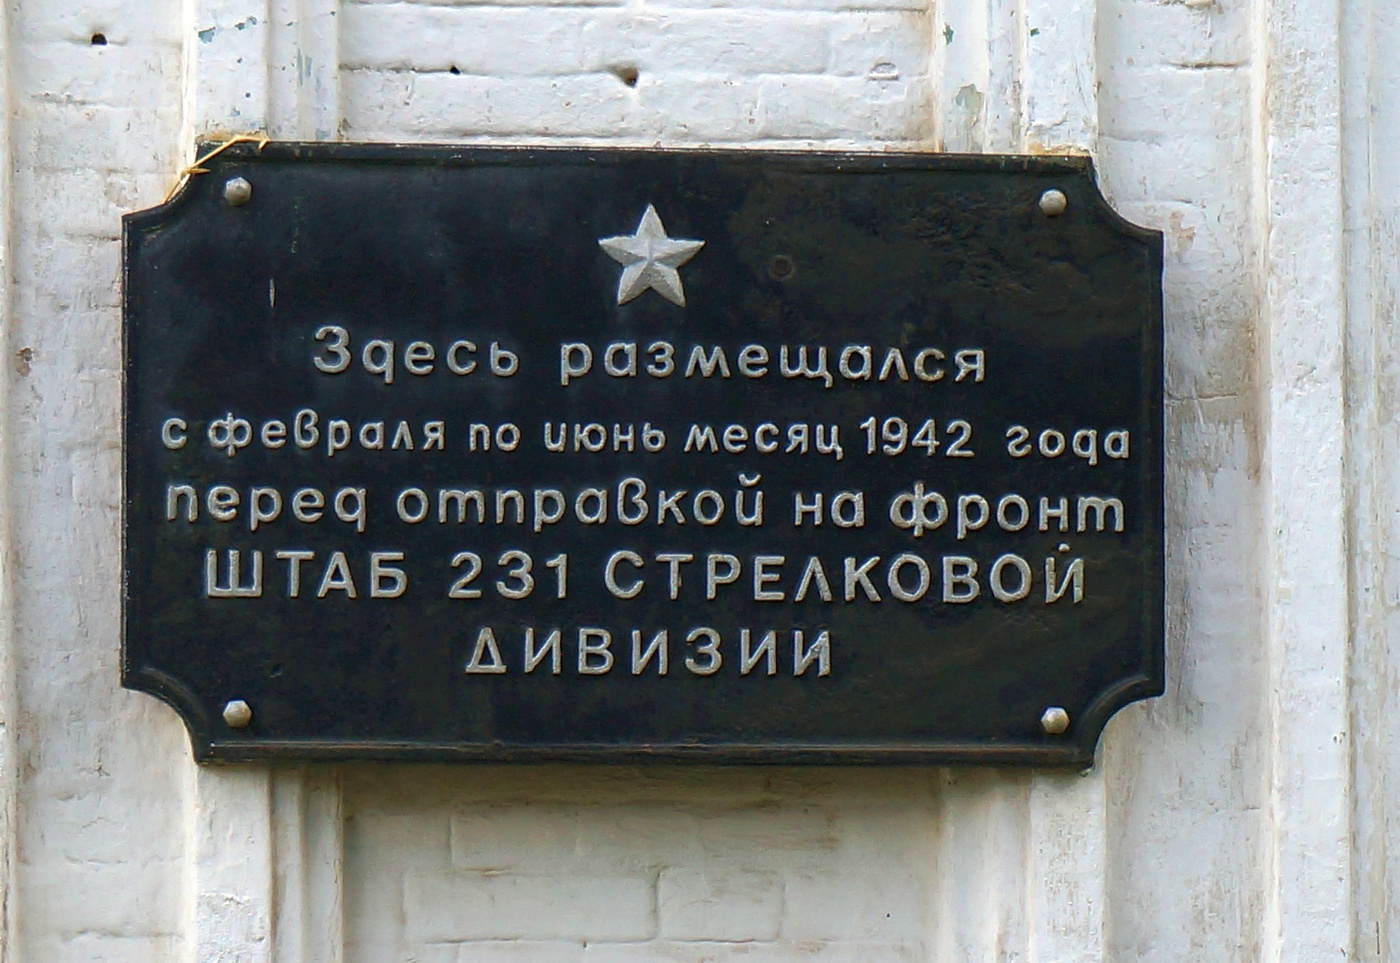 Kungur, Октябрьская улица, 18. Kungur — Memorial plaques